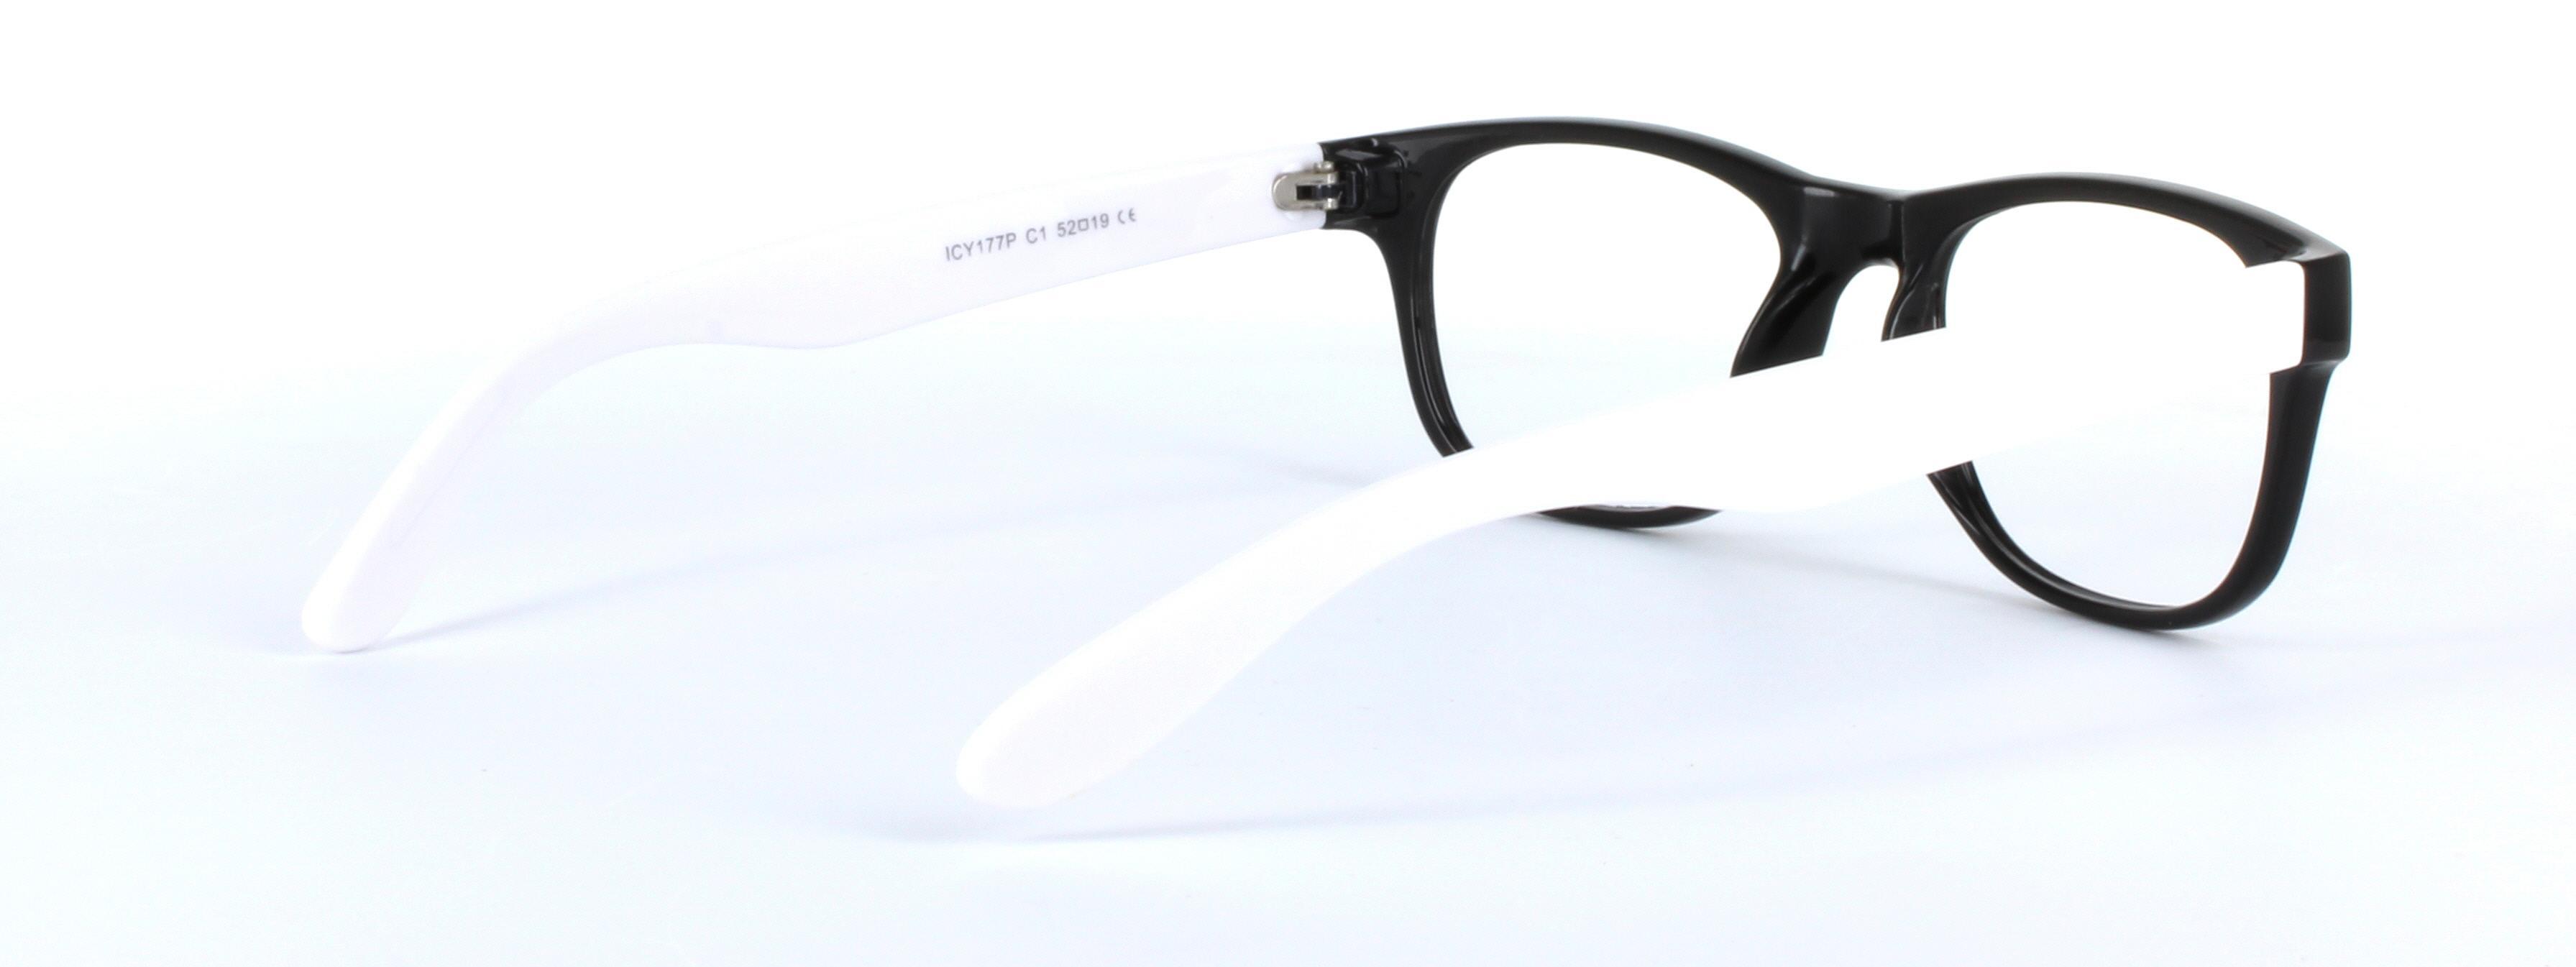 Brazil Black and White Full Rim Oval Plastic Glasses - Image View 4